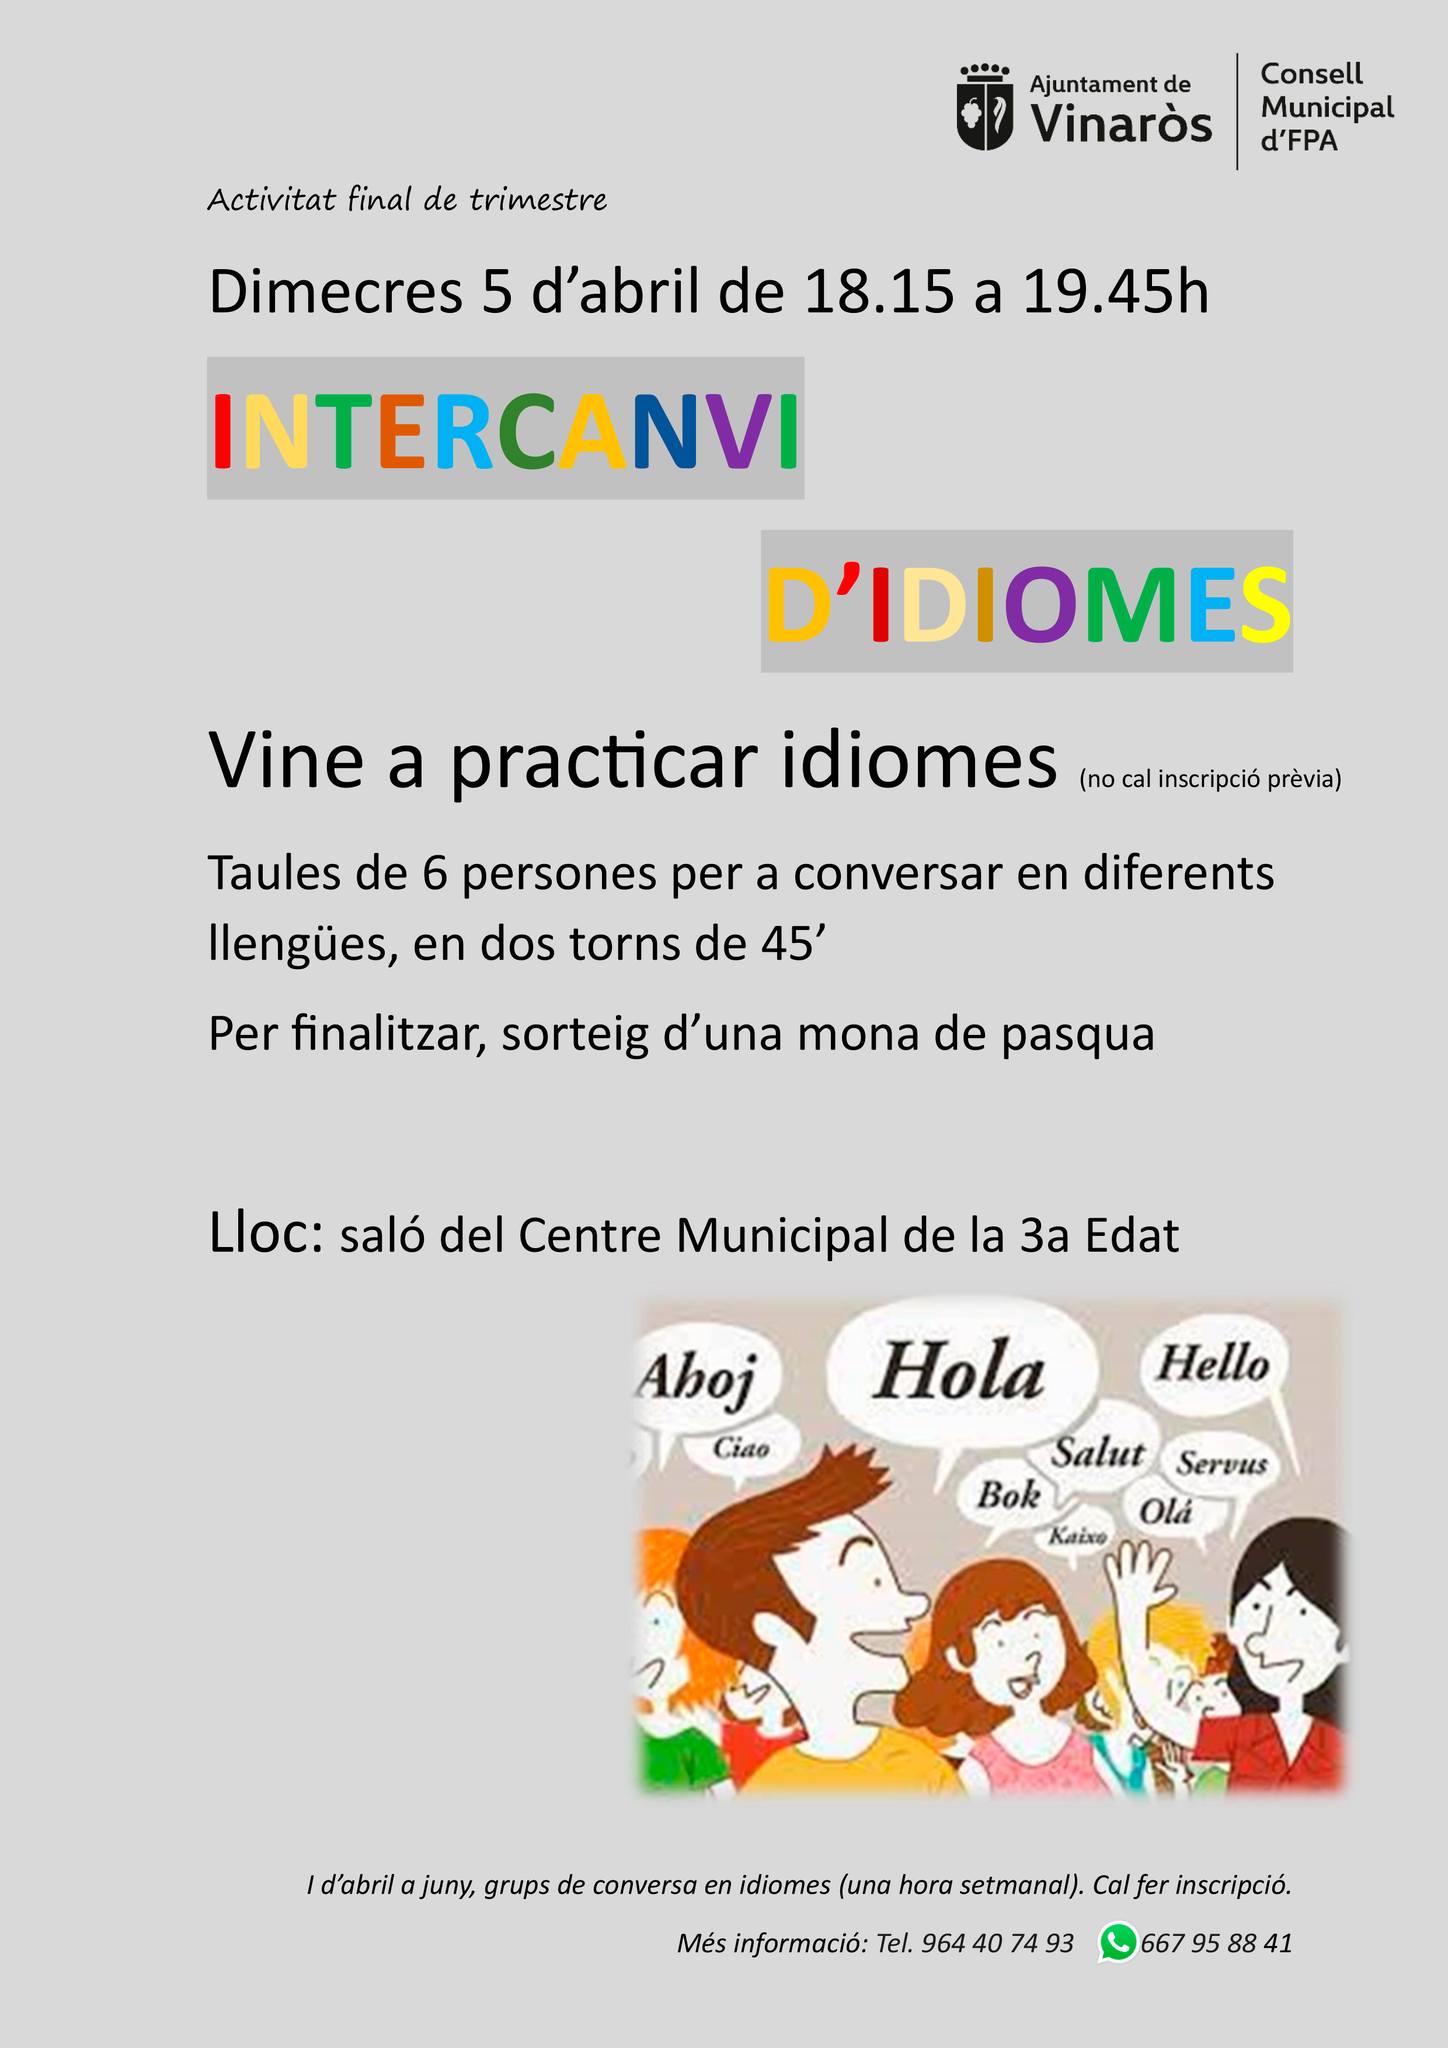 Jornada de intercambio de idiomas a Vinaròs